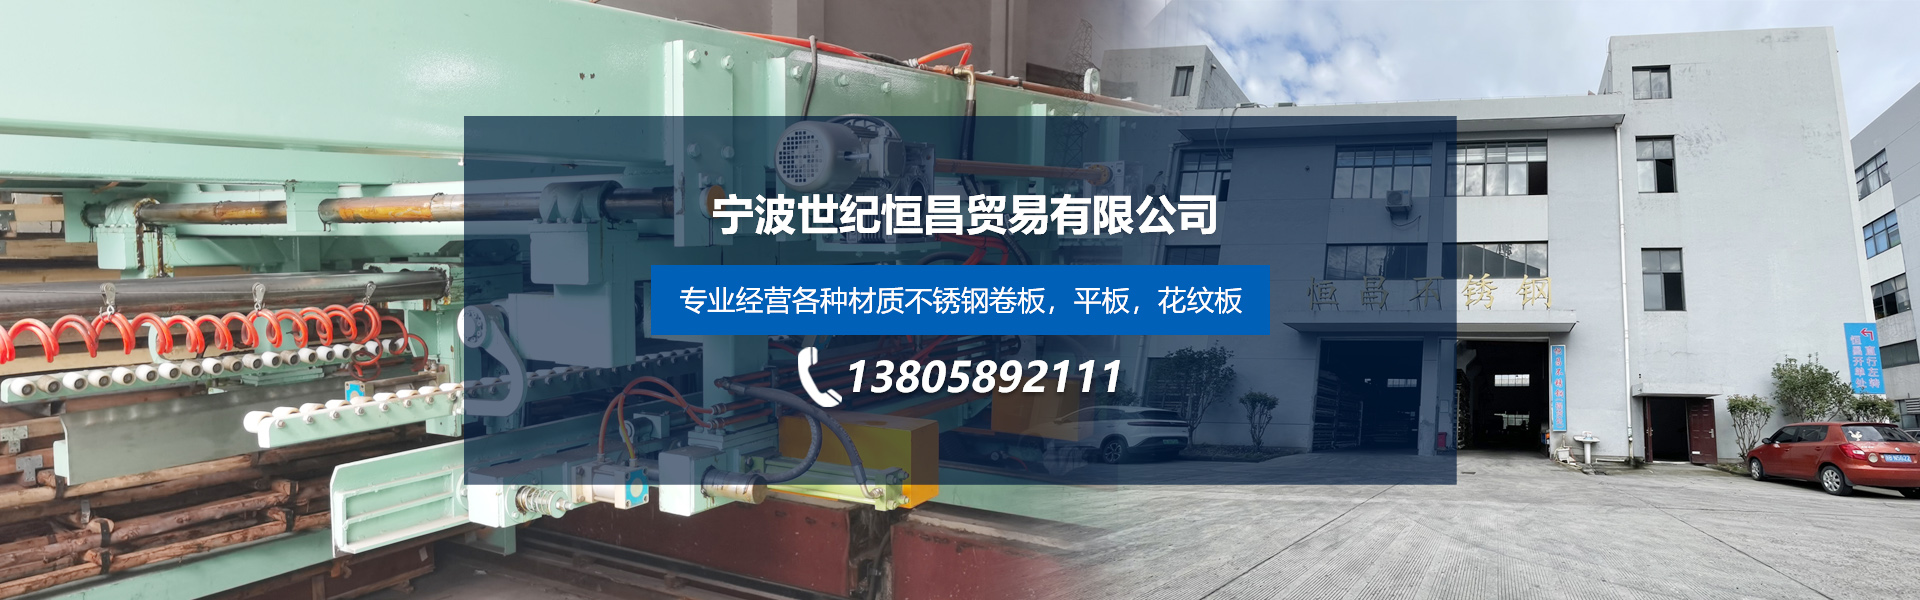 AG真人·(中国)官方网站 - App STORE_image4249